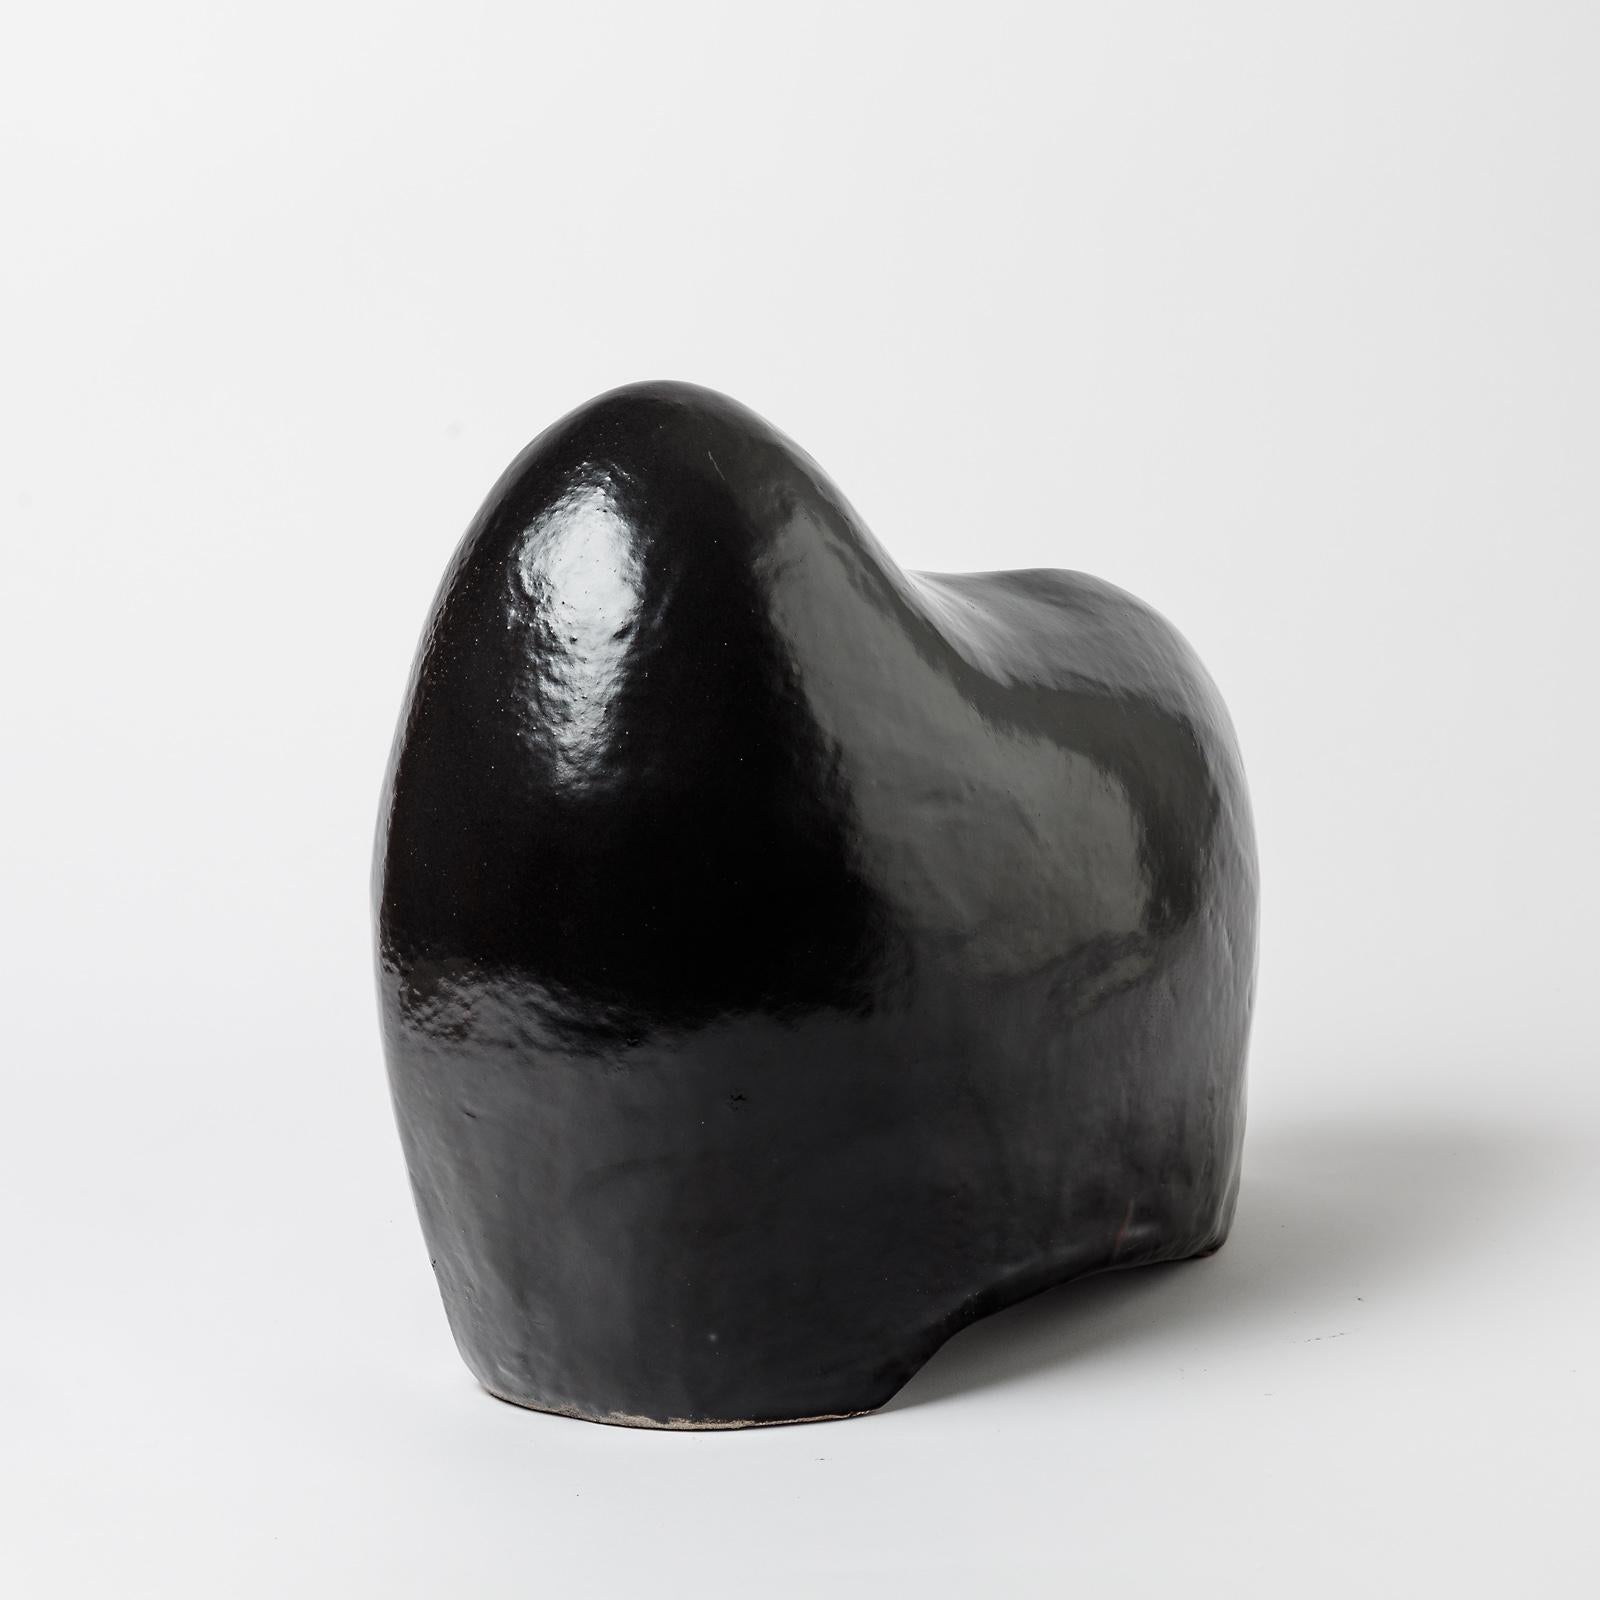 French Ceramic Sculpture with Black Glaze Decoration by Gisèle Buthod-garçon